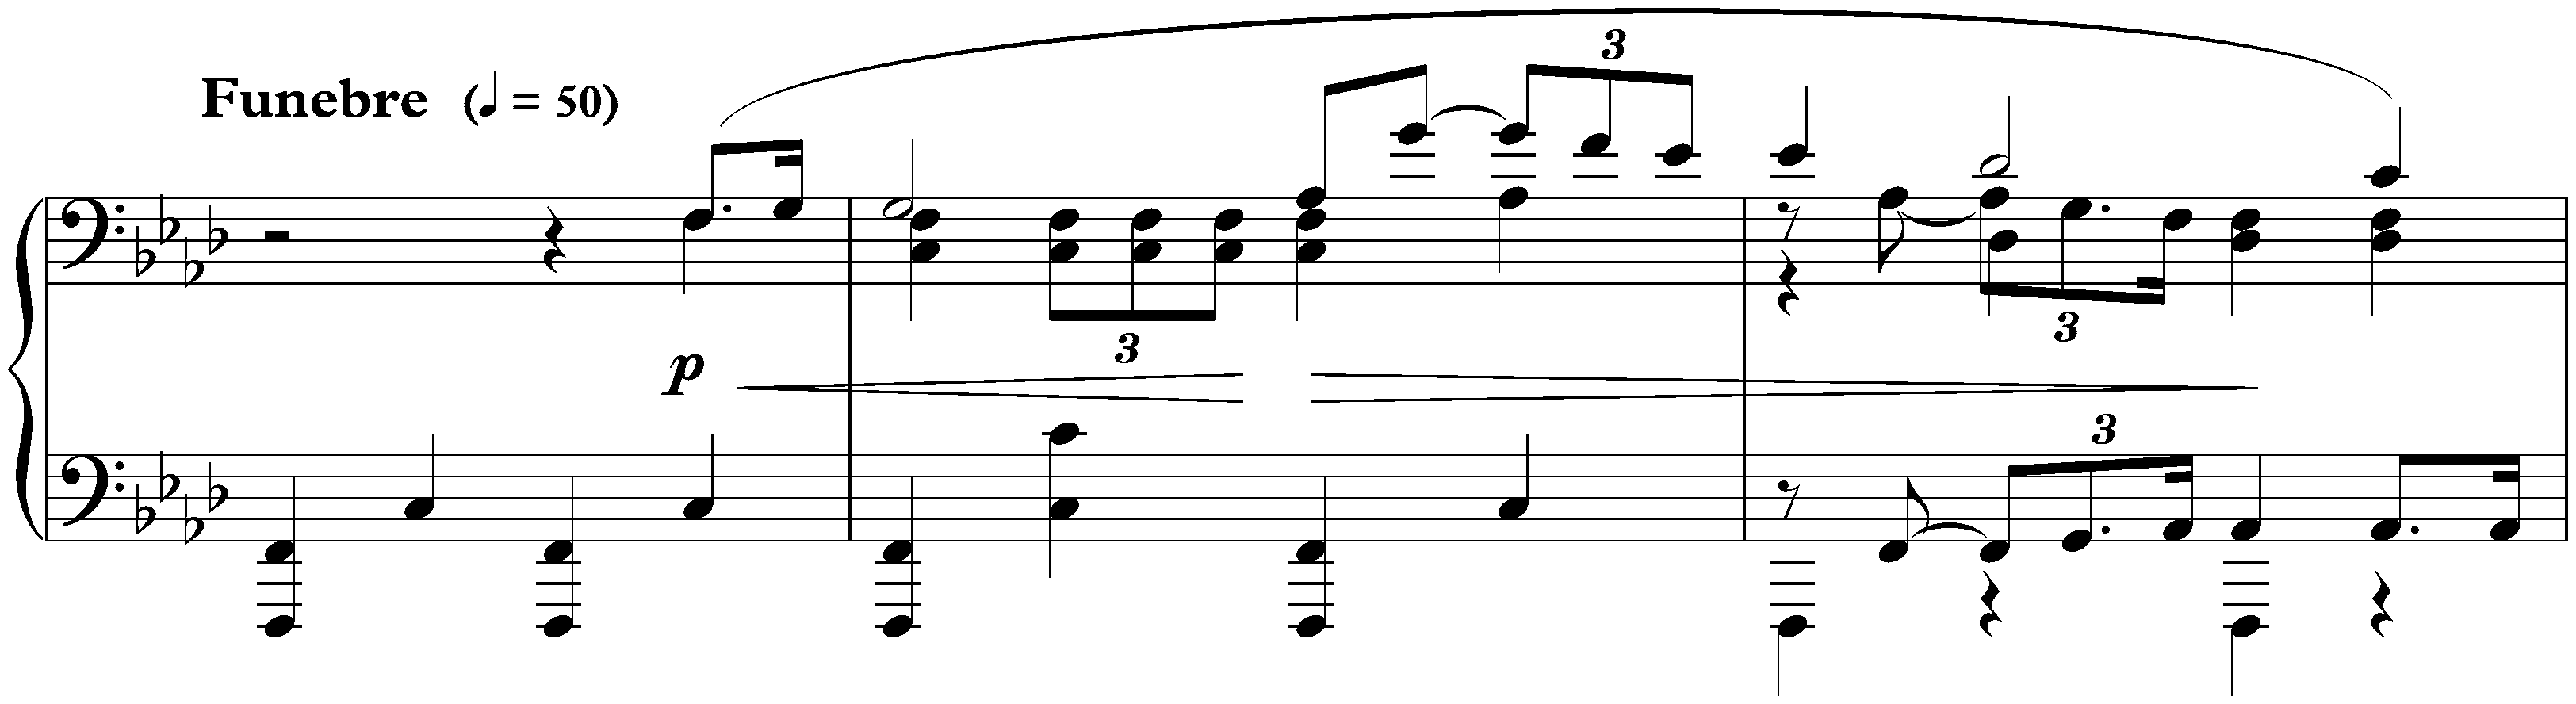 Sonata no. 1 in F minor, op. 6; 4. Funebre